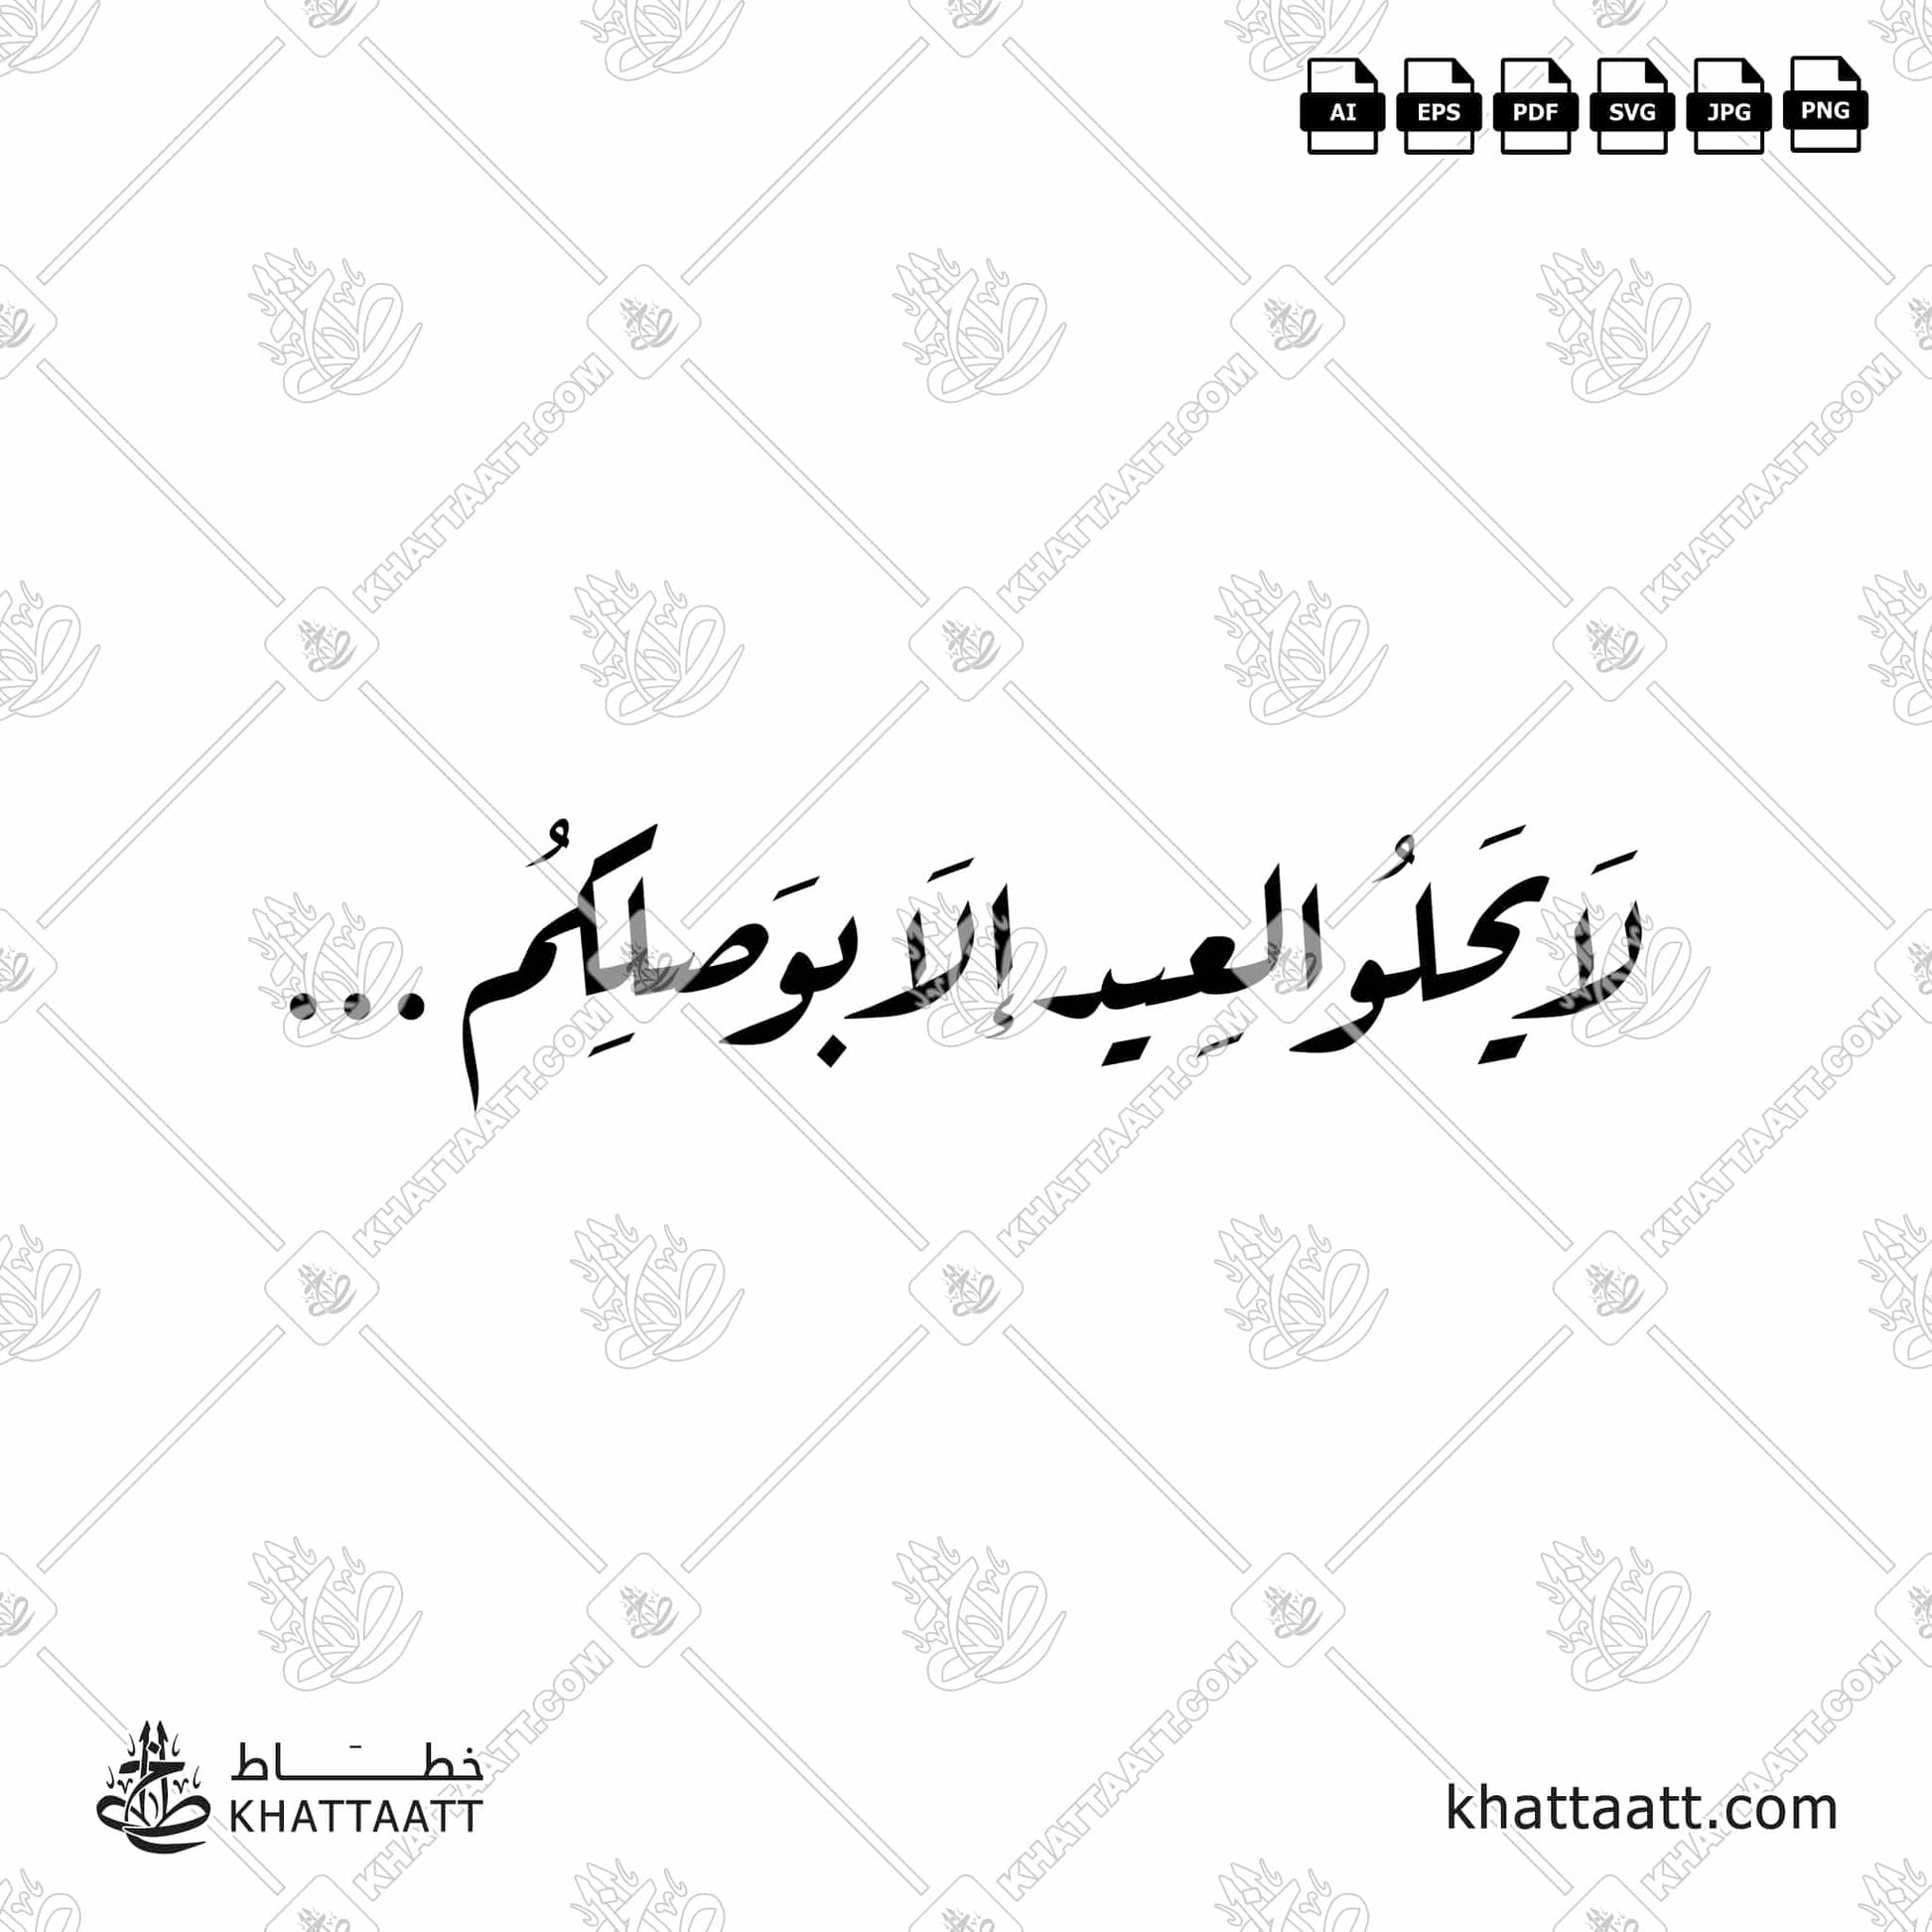 Arabic Calligraphy of لا يحلو العيد إلا بوصلكم in Ruqaa Script خط الرقعة.